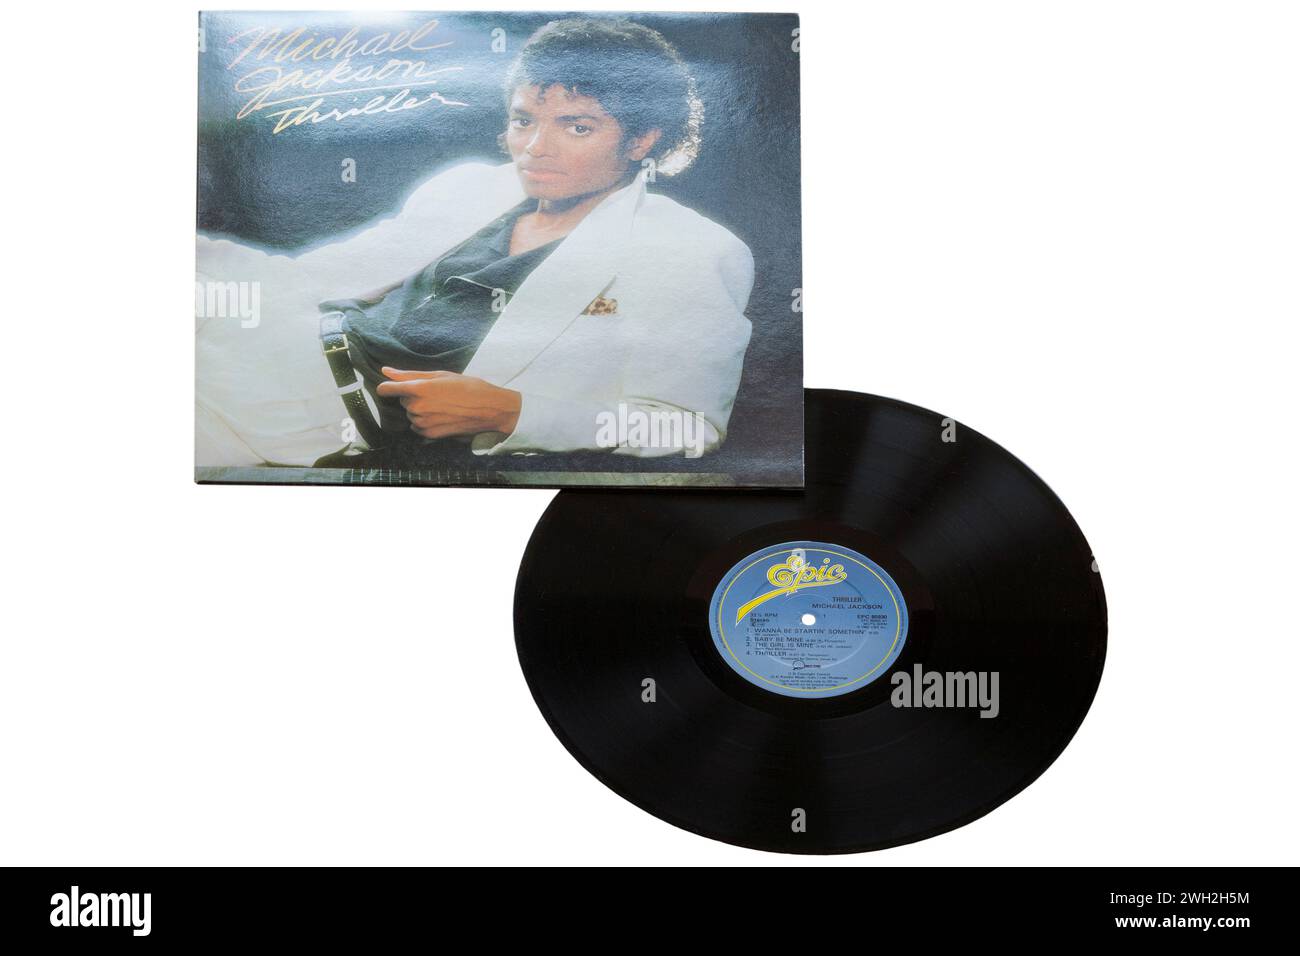 Michael Jackson Thriller vinyl record album LP cover isolated on white background - 1982 Stock Photo